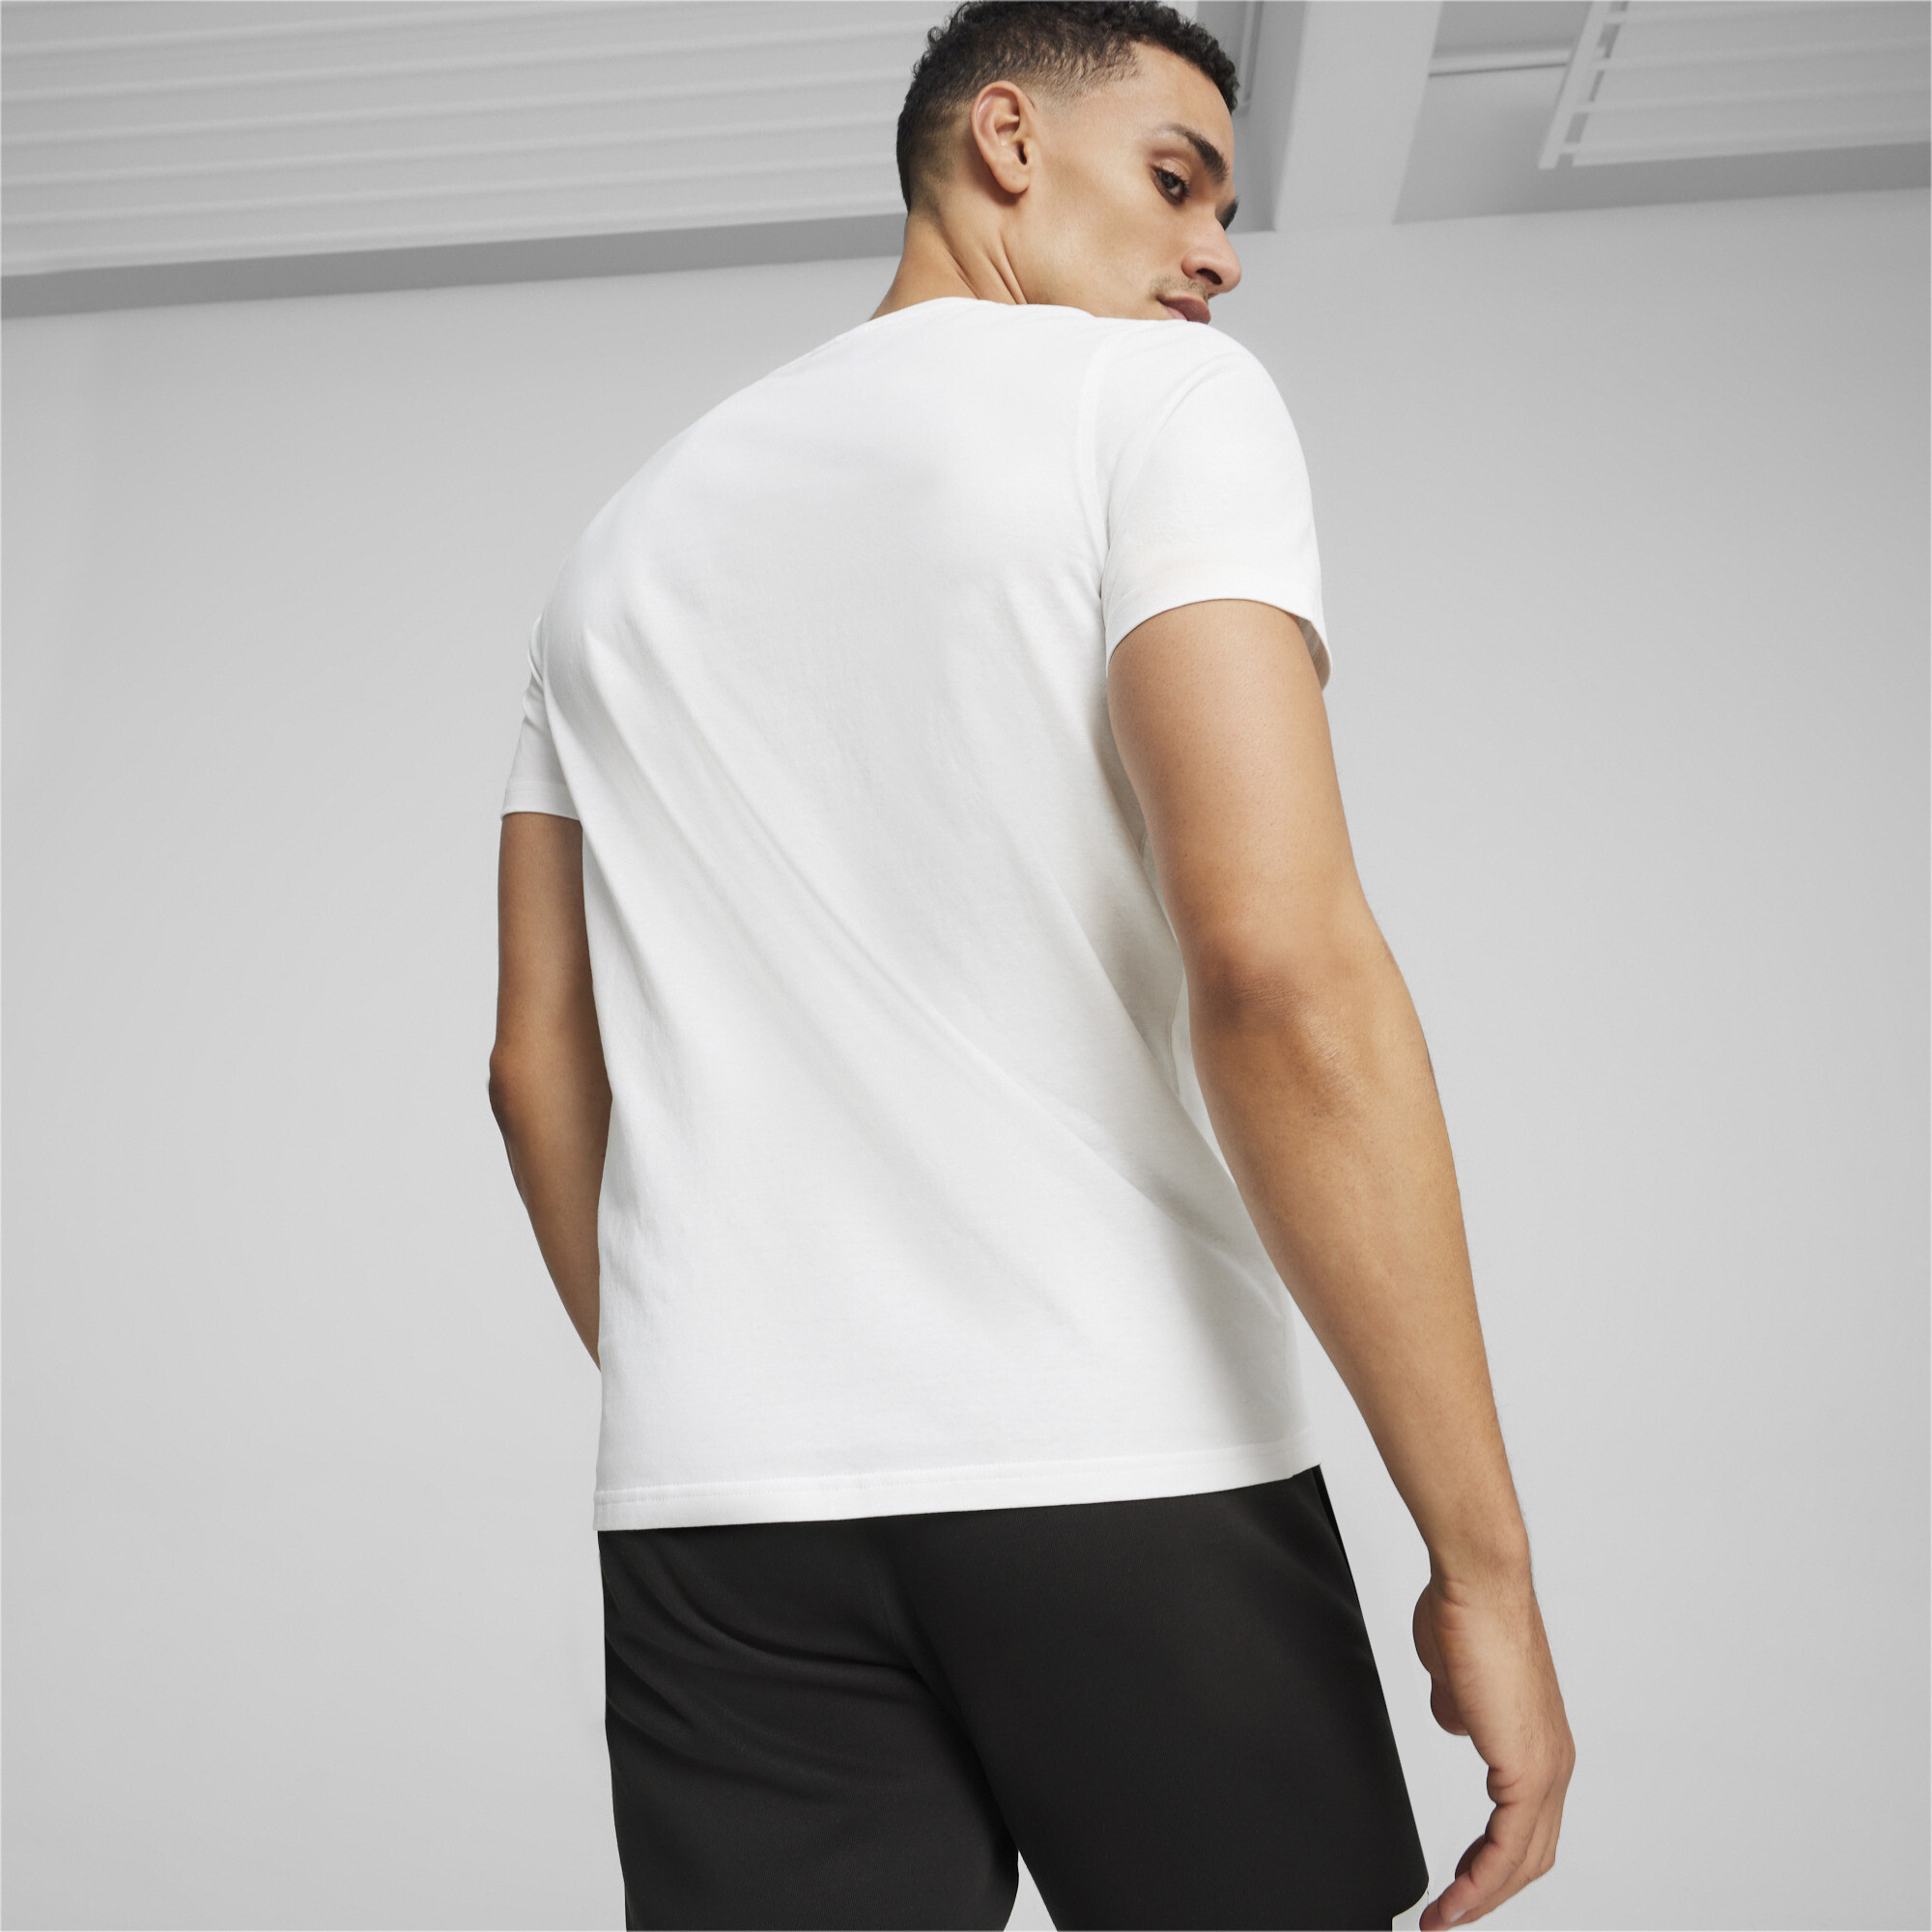 Men's PUMA The Hooper Basketball T-Shirt In White, Size XS